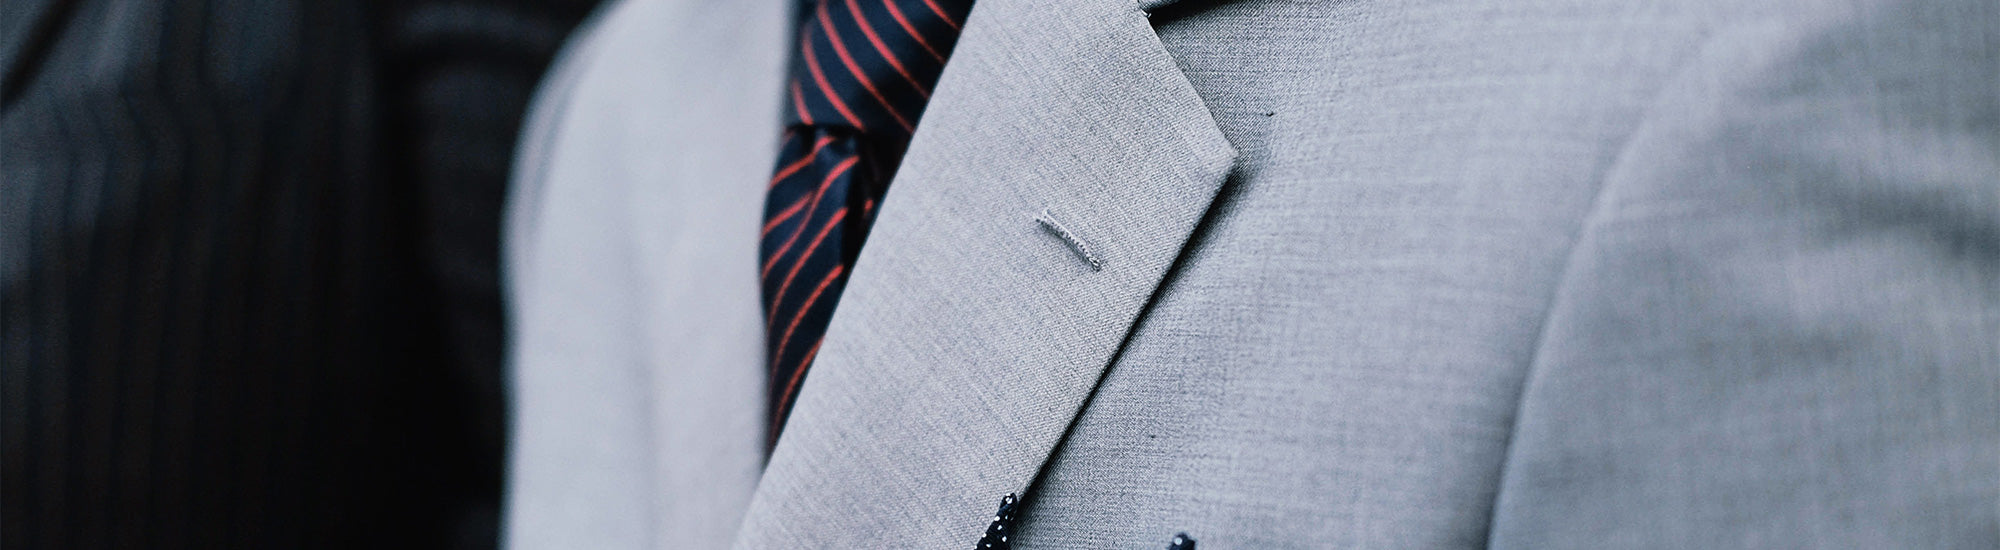 close-up of light grey suit